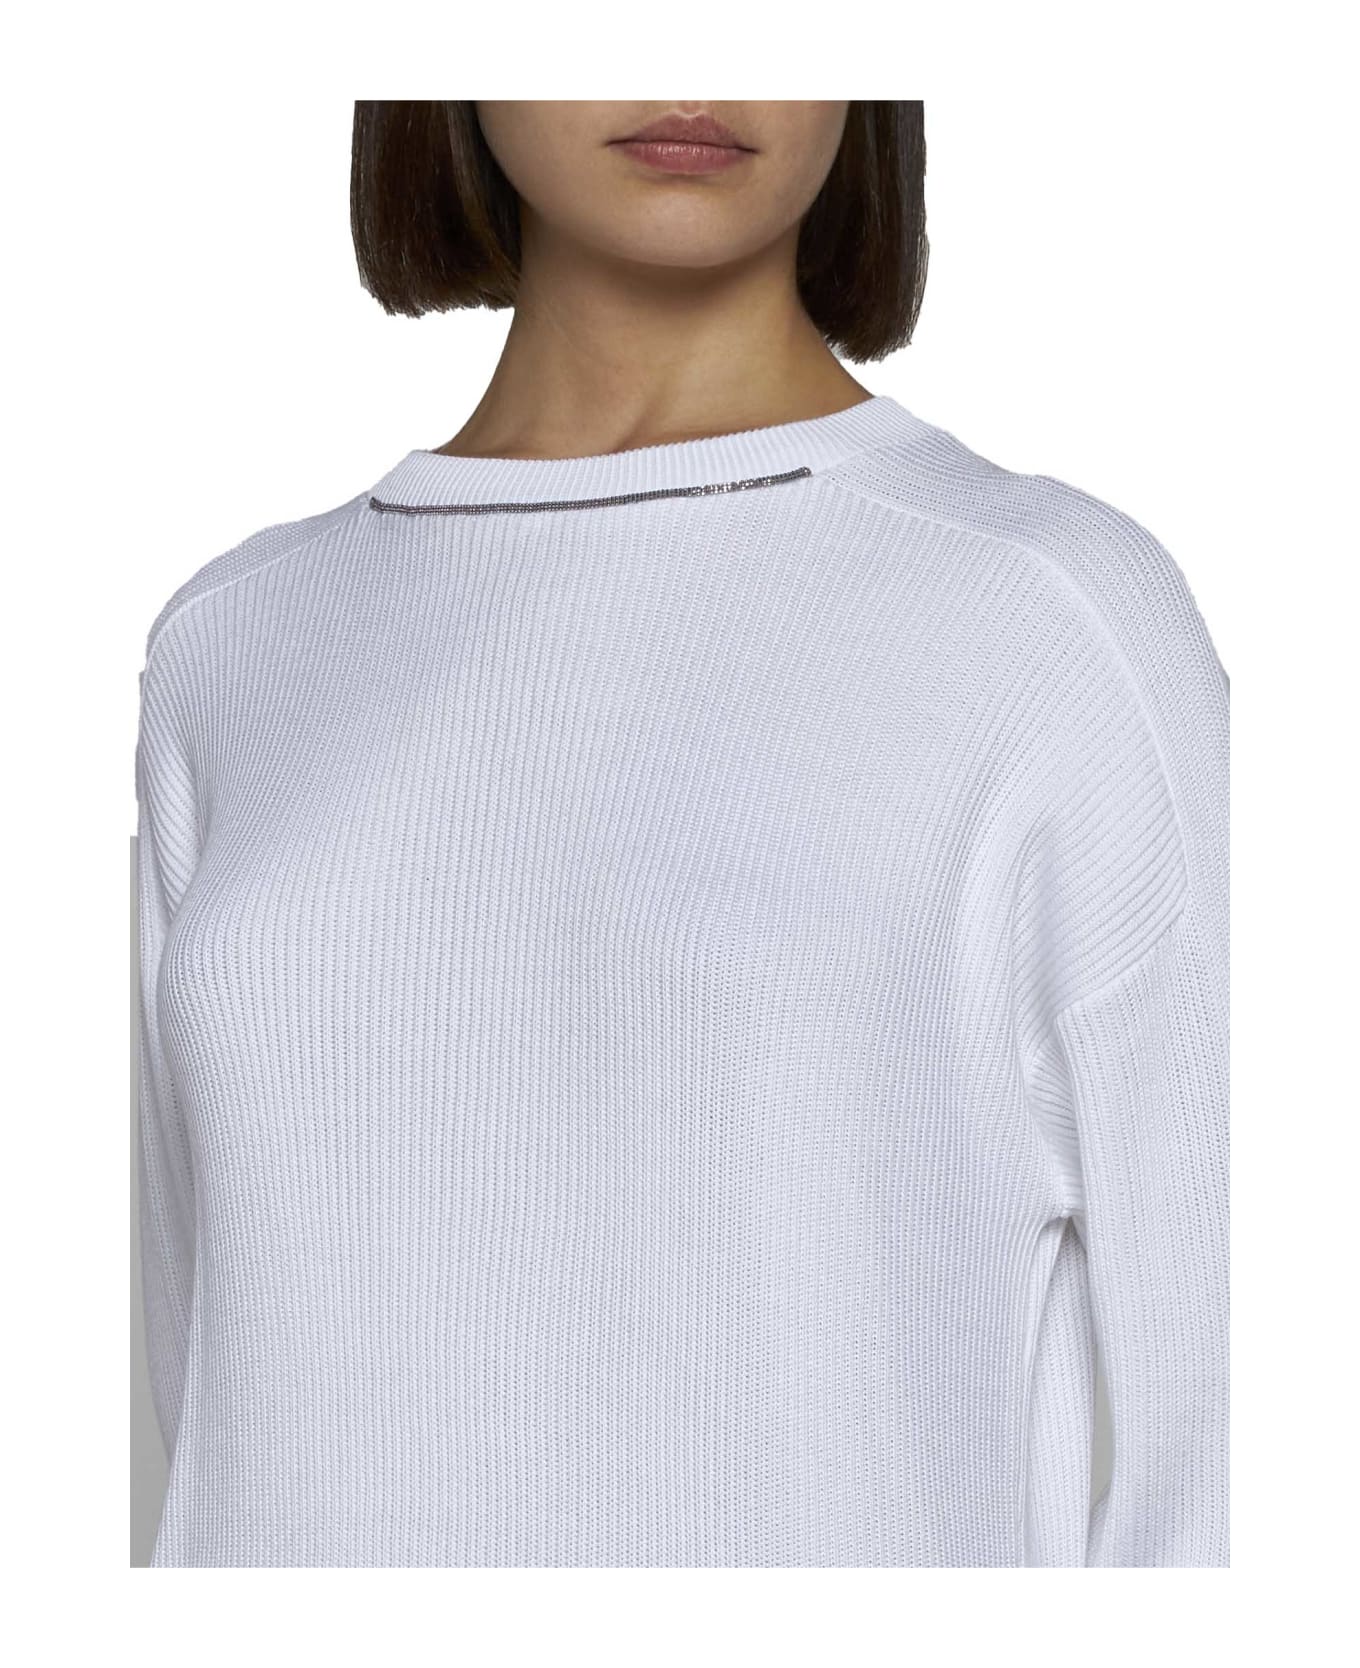 Brunello Cucinelli Sweater - Bianco ニットウェア